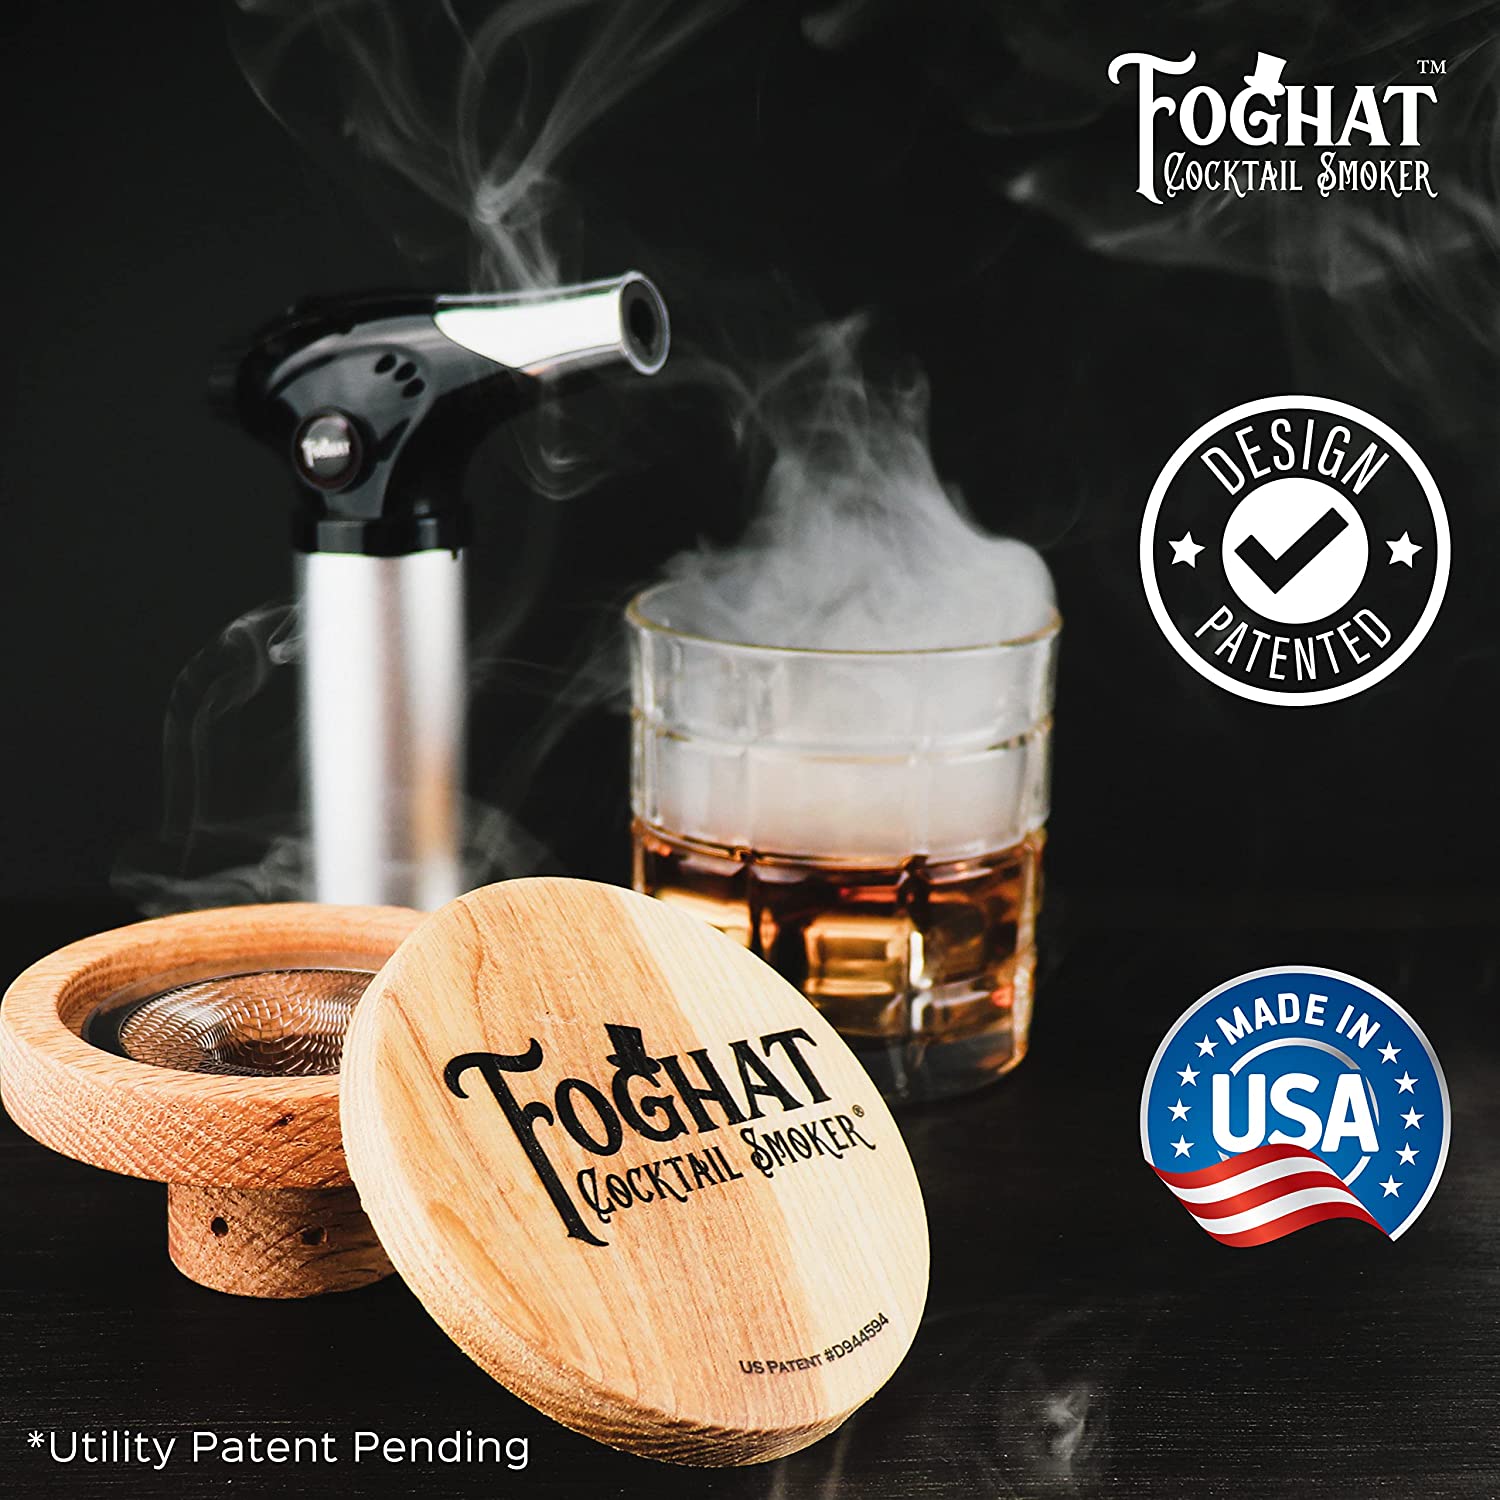 Foghat Cocktail Smoker Kit - BourbonTrek